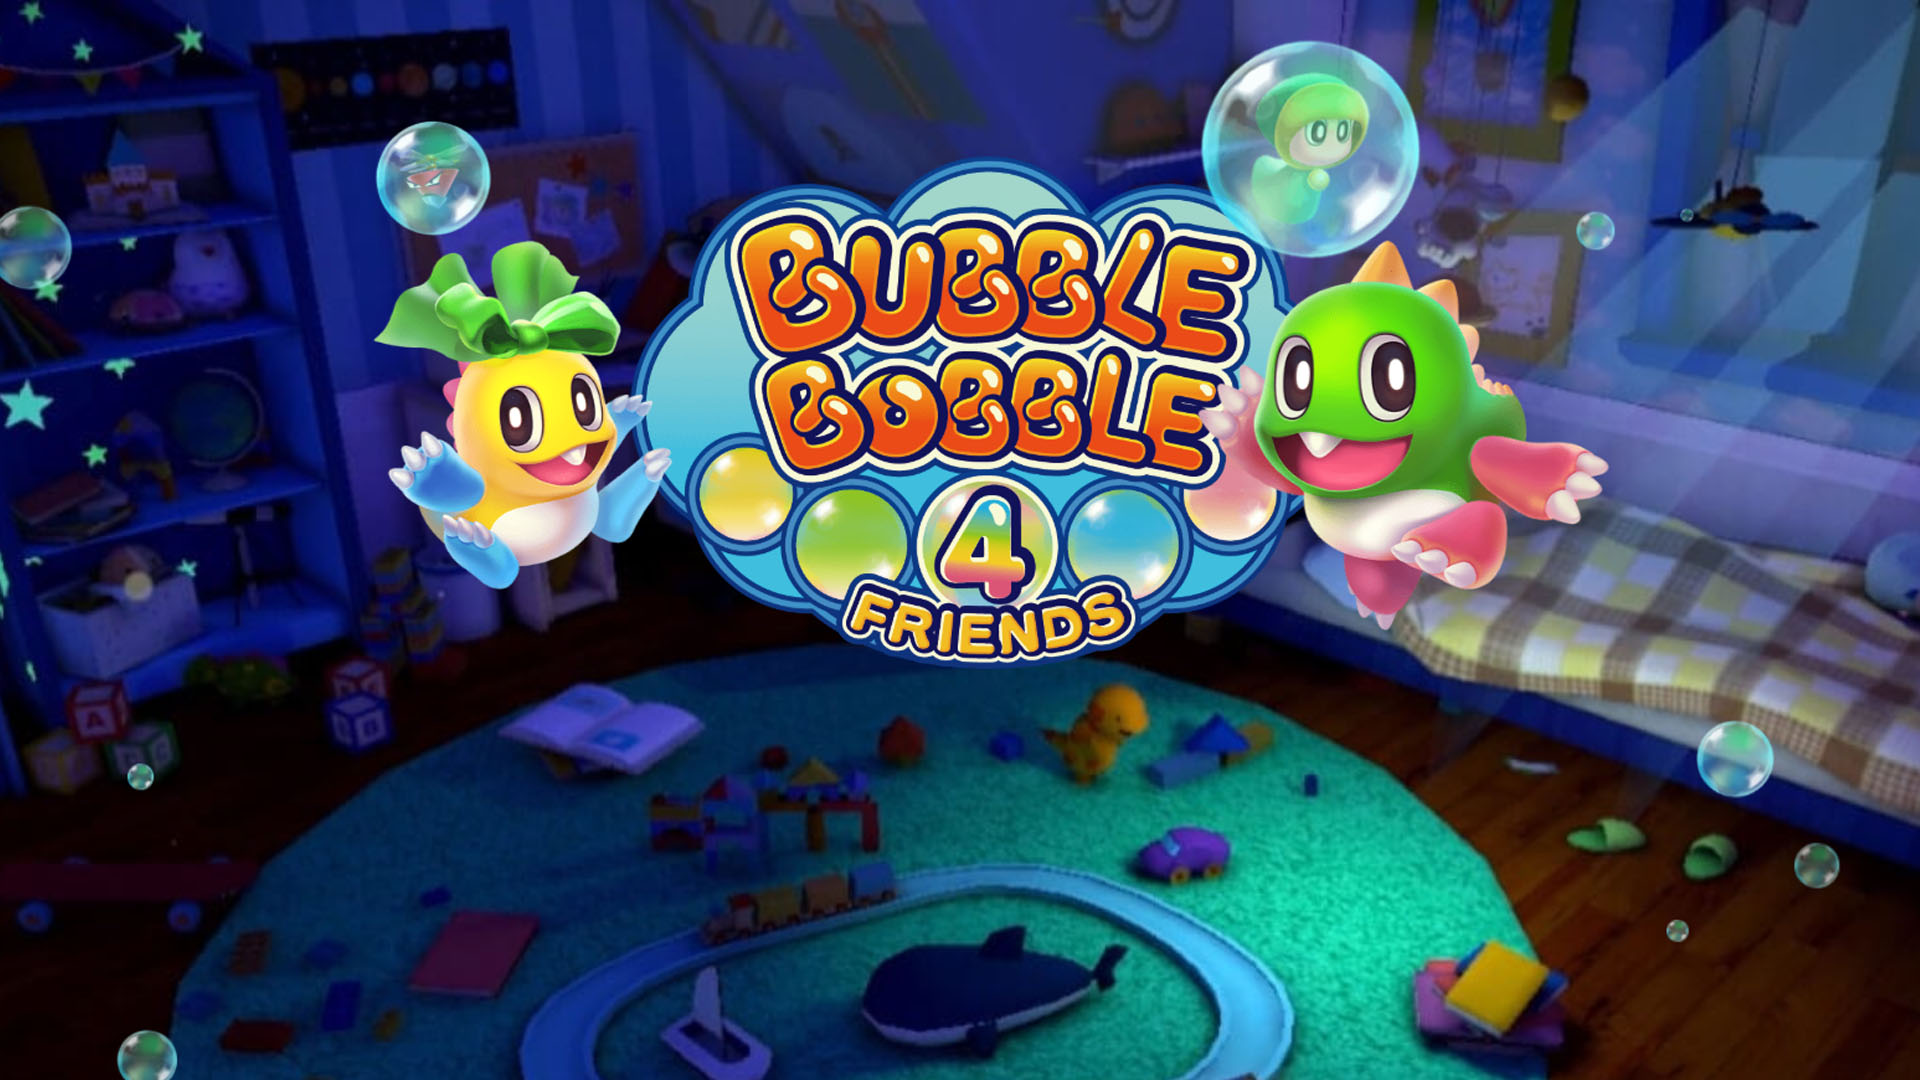 Klein naakt Internationale Bubble Bobble 4 Friends review | GodisaGeek.com